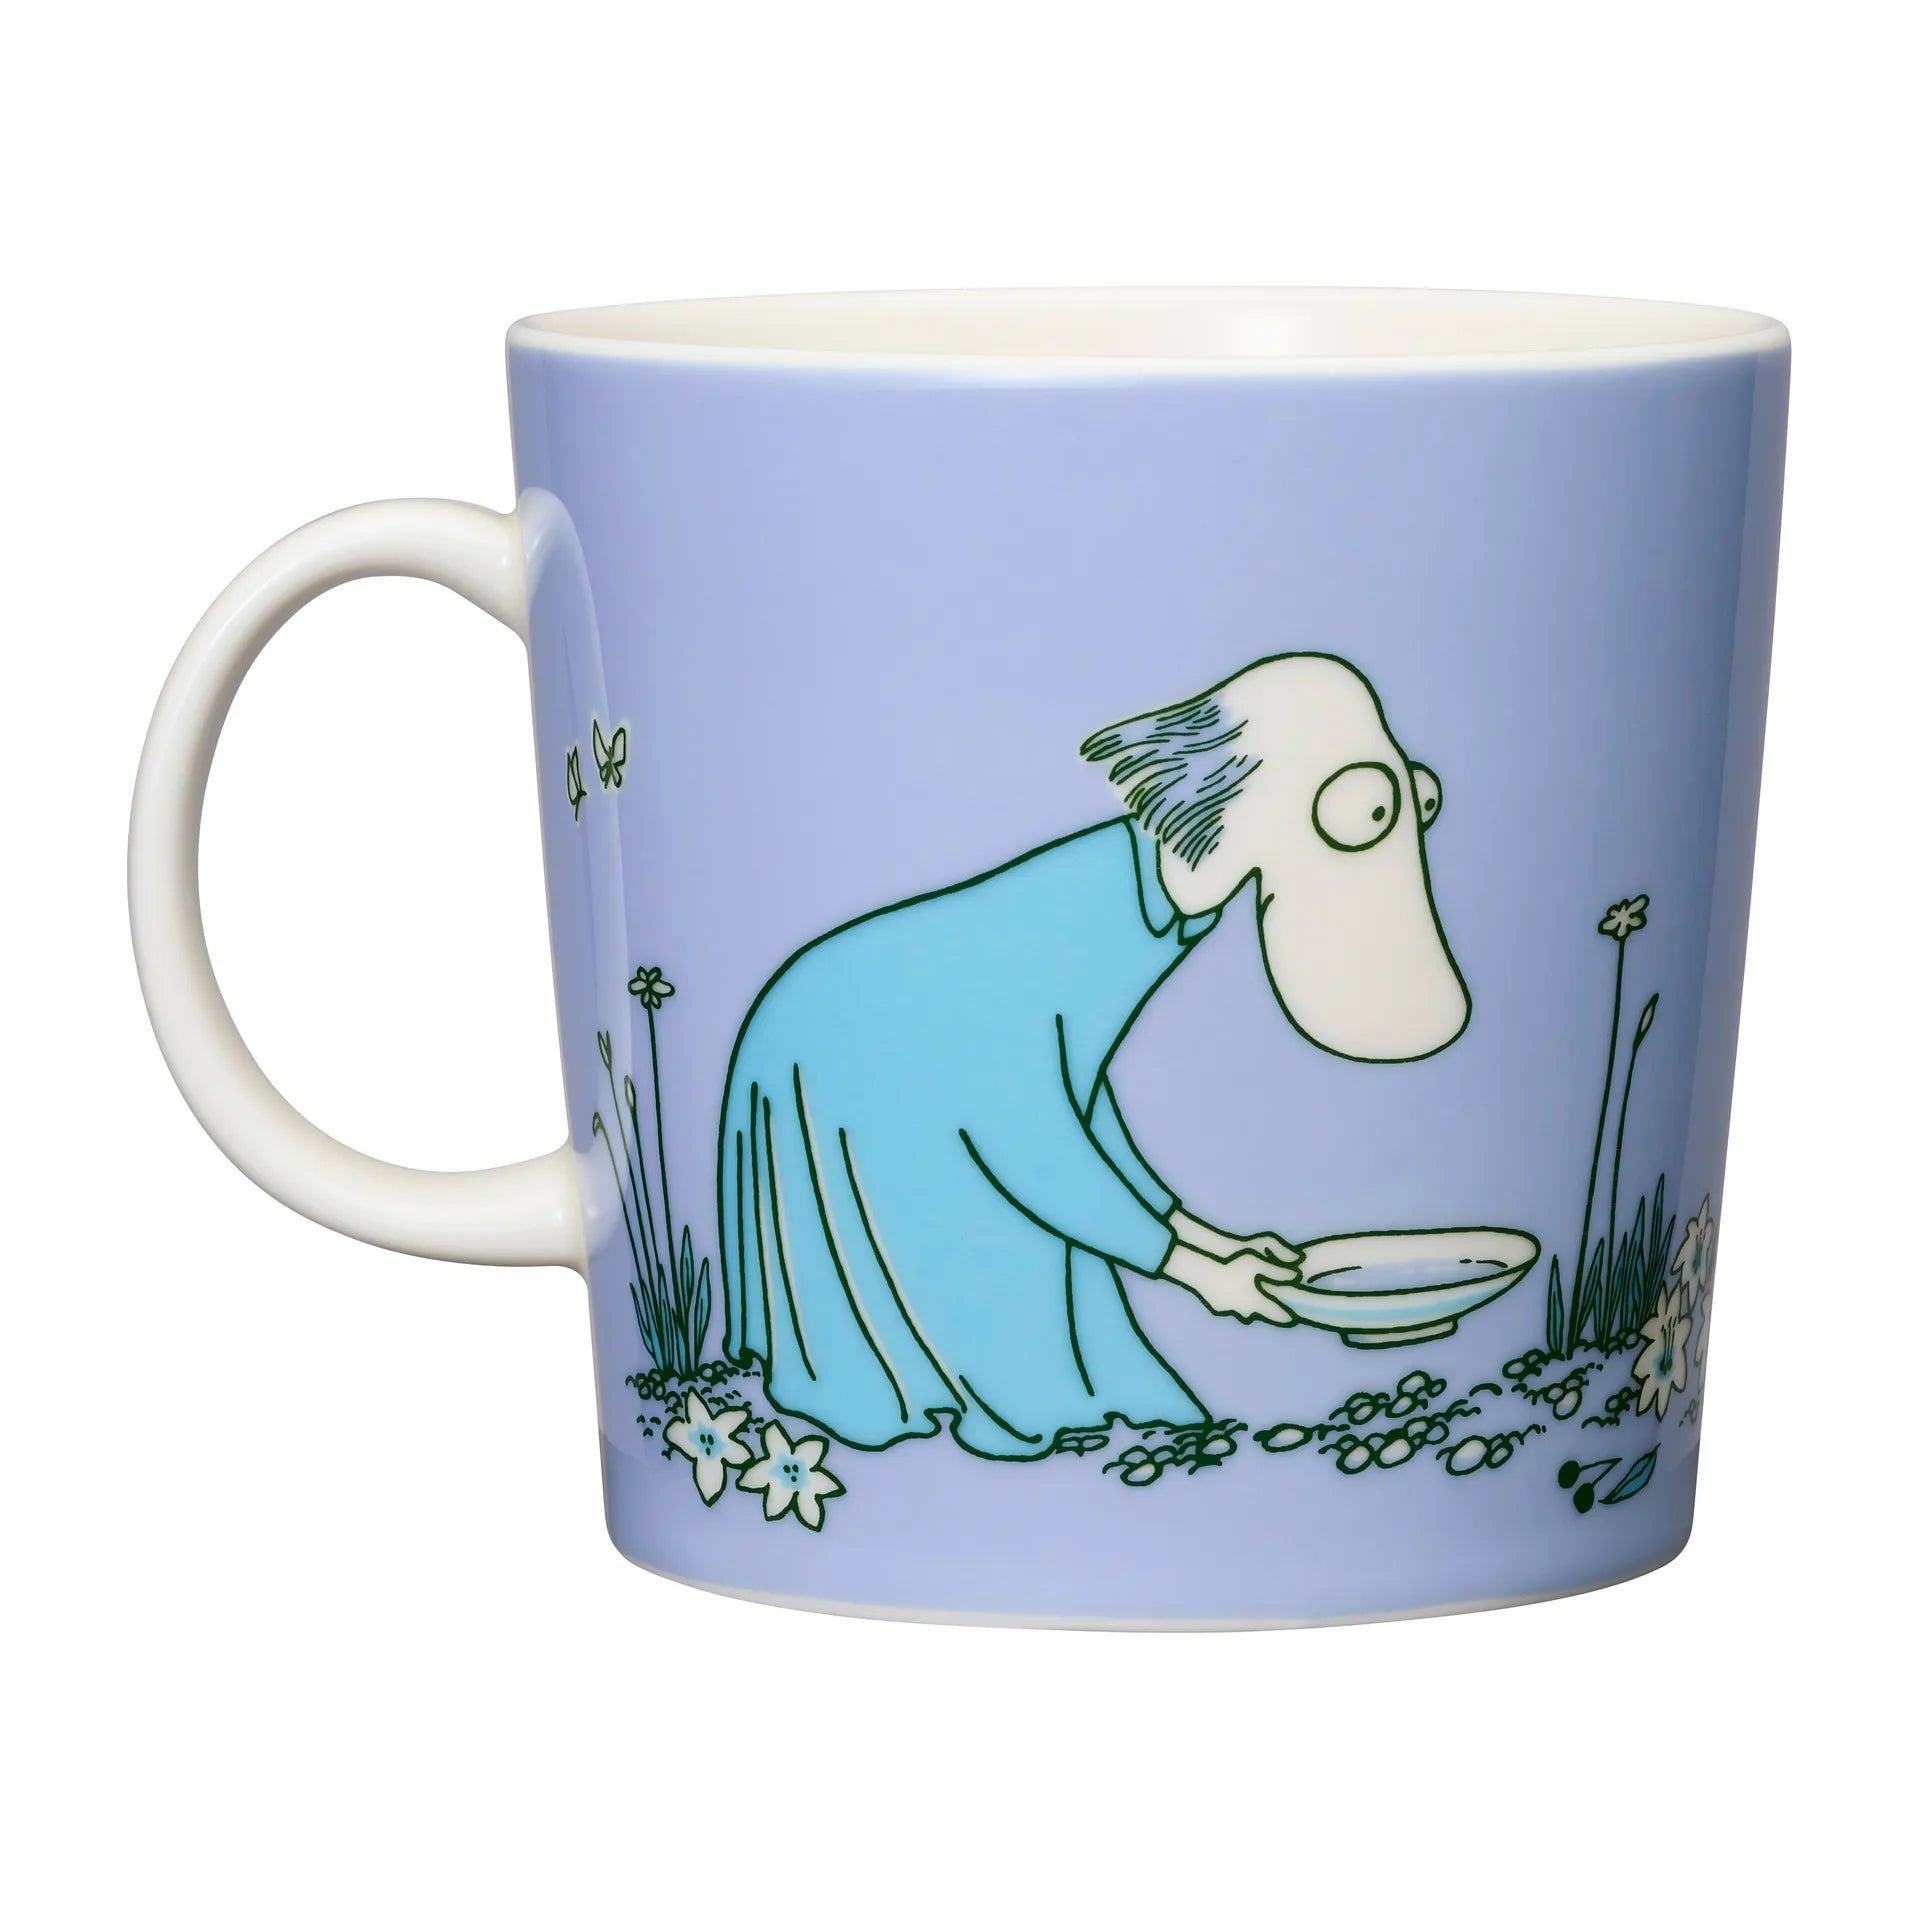 Moomin mug special LARGE 400ml ABC Moomin mug 40 cl M